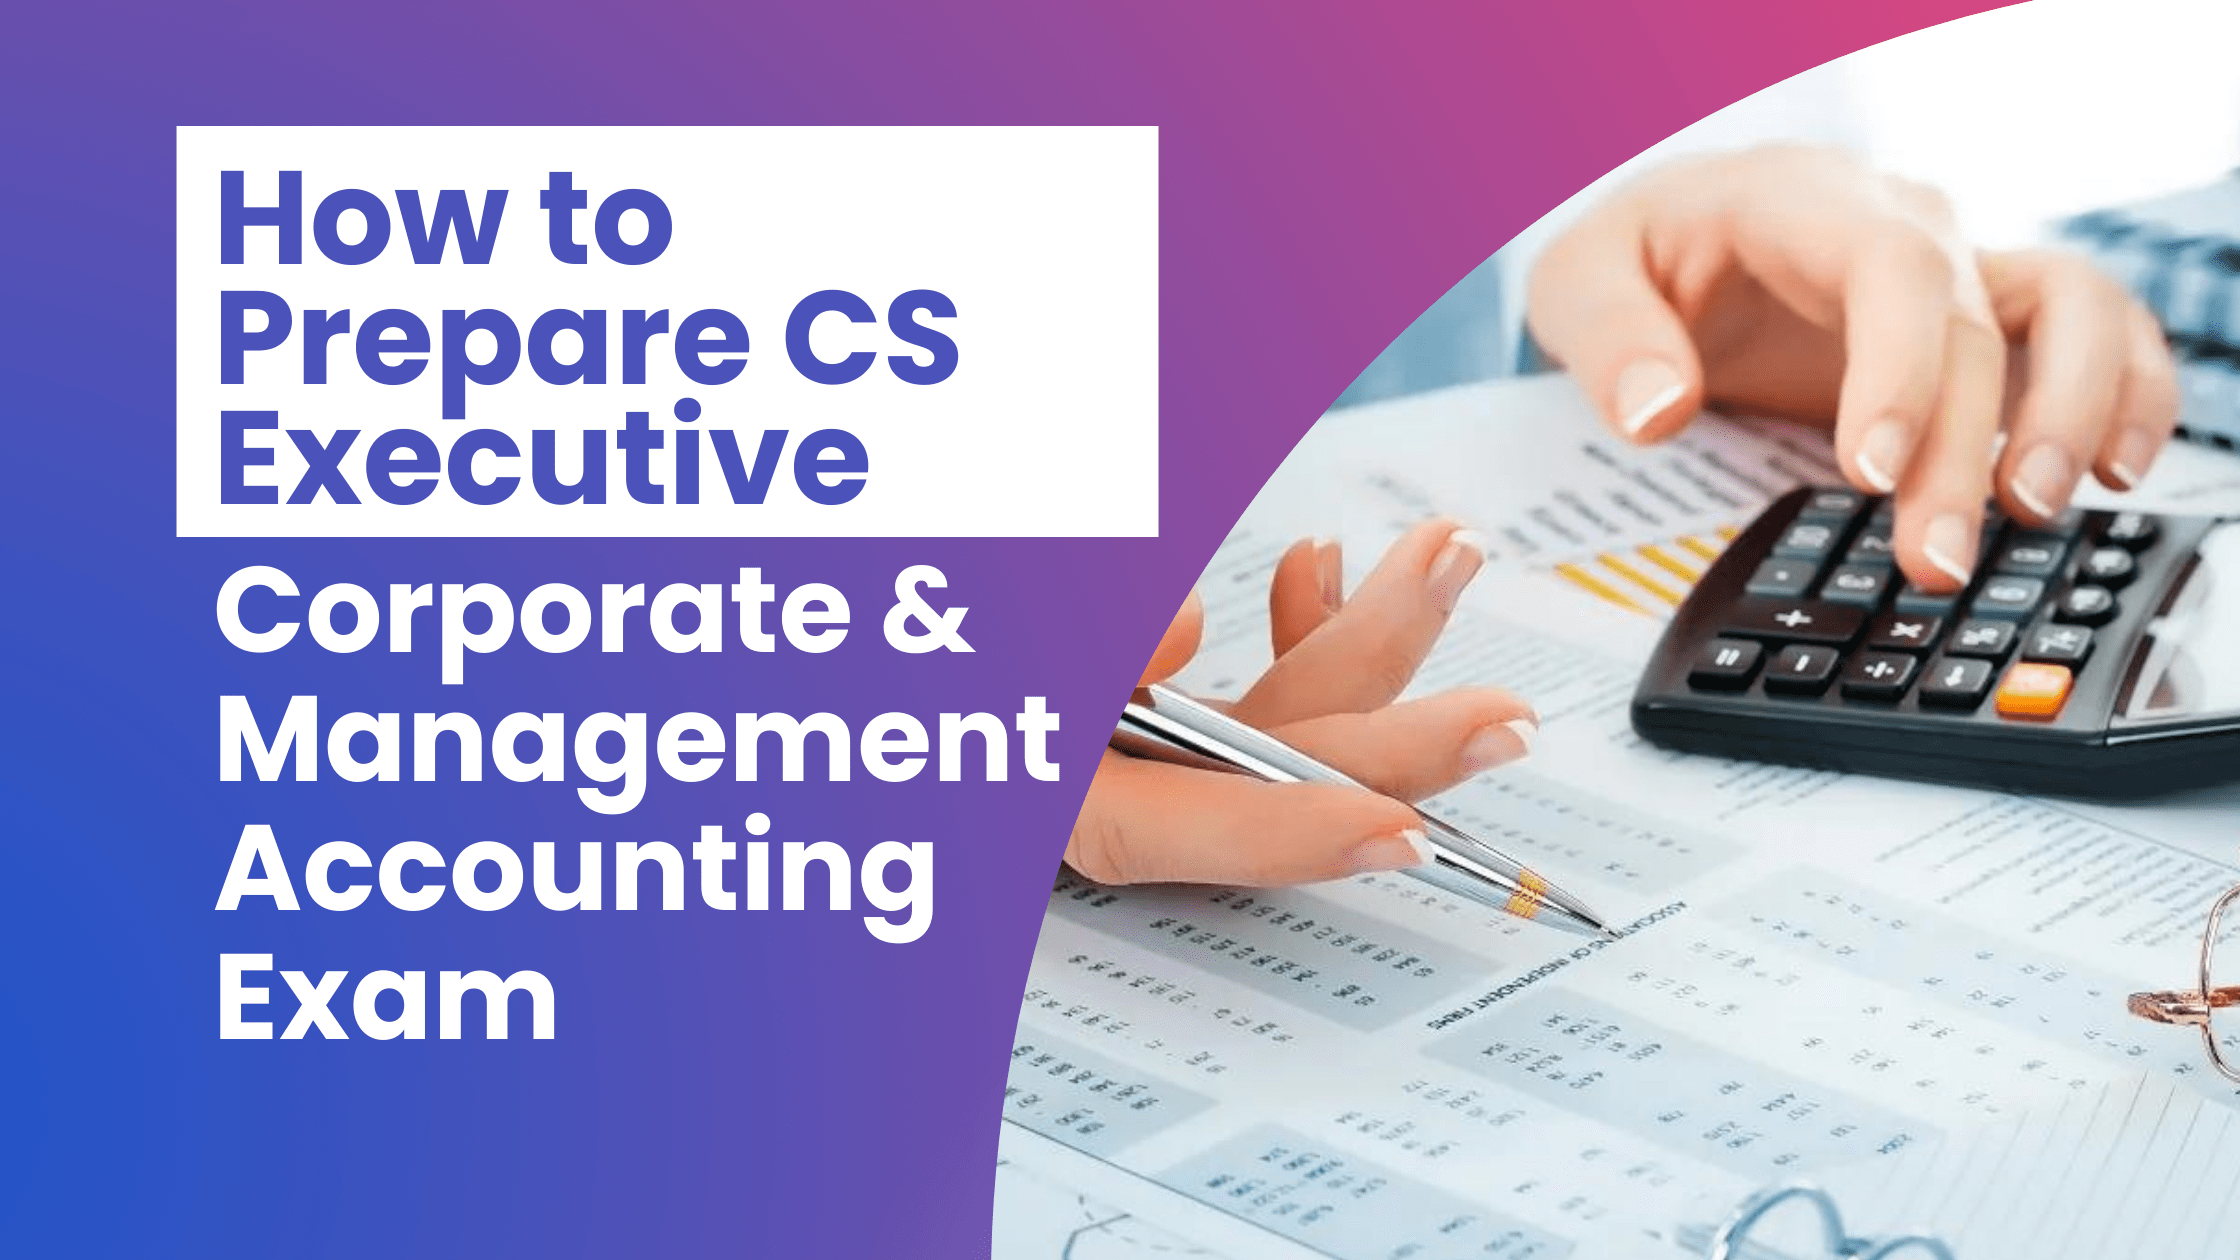 How to Prepare CS Executive Corporate & Management Accounting Exam